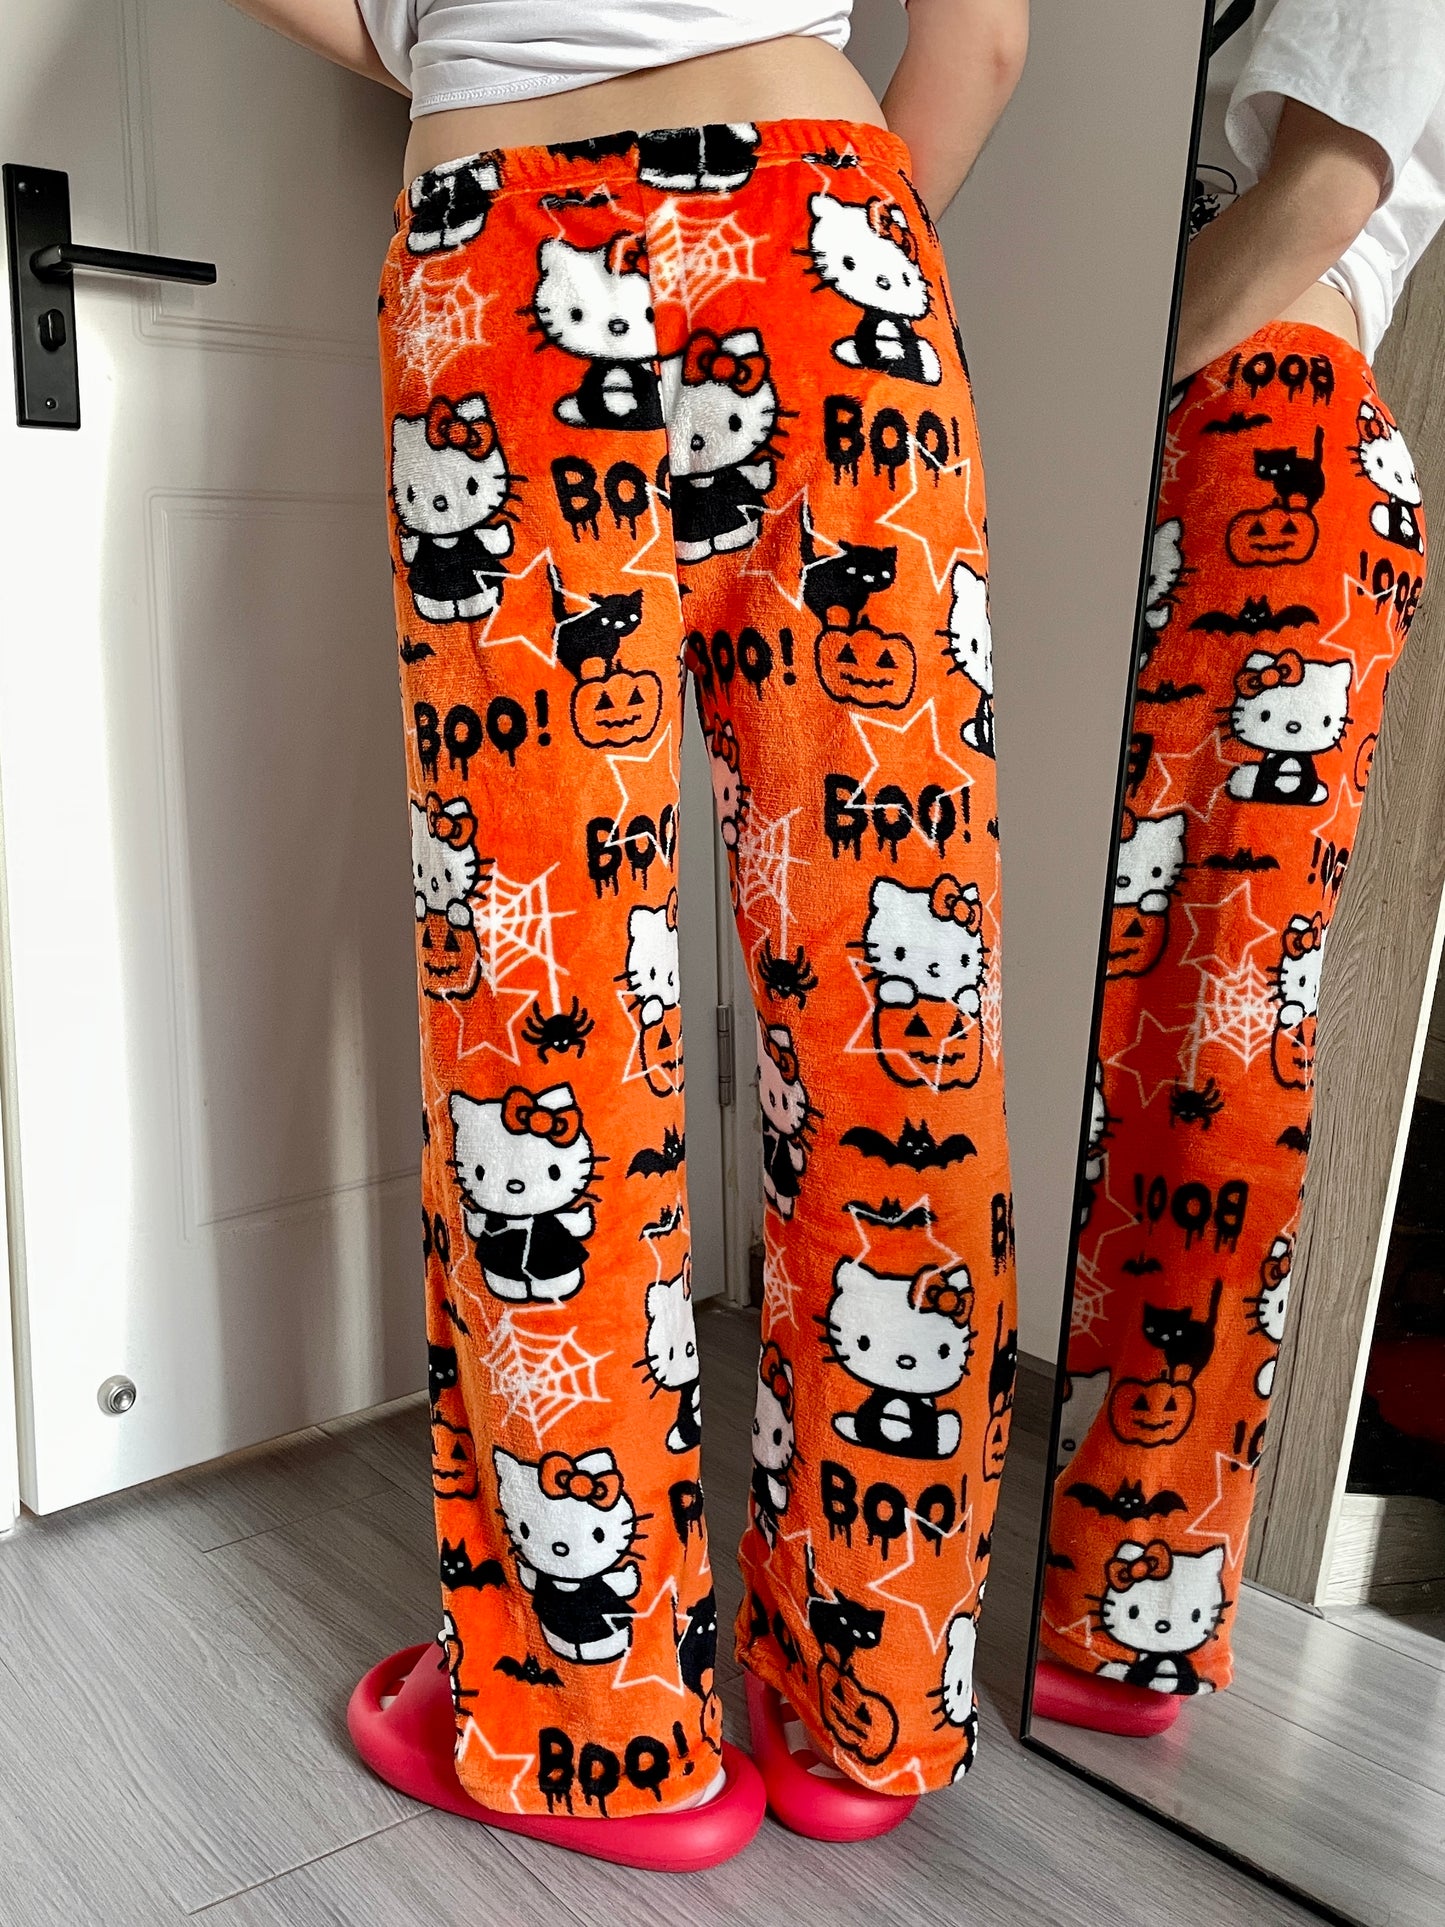 KT Pants Pajama Cute Soft Long Bottoms Women Pjs Pj Jammies Gift